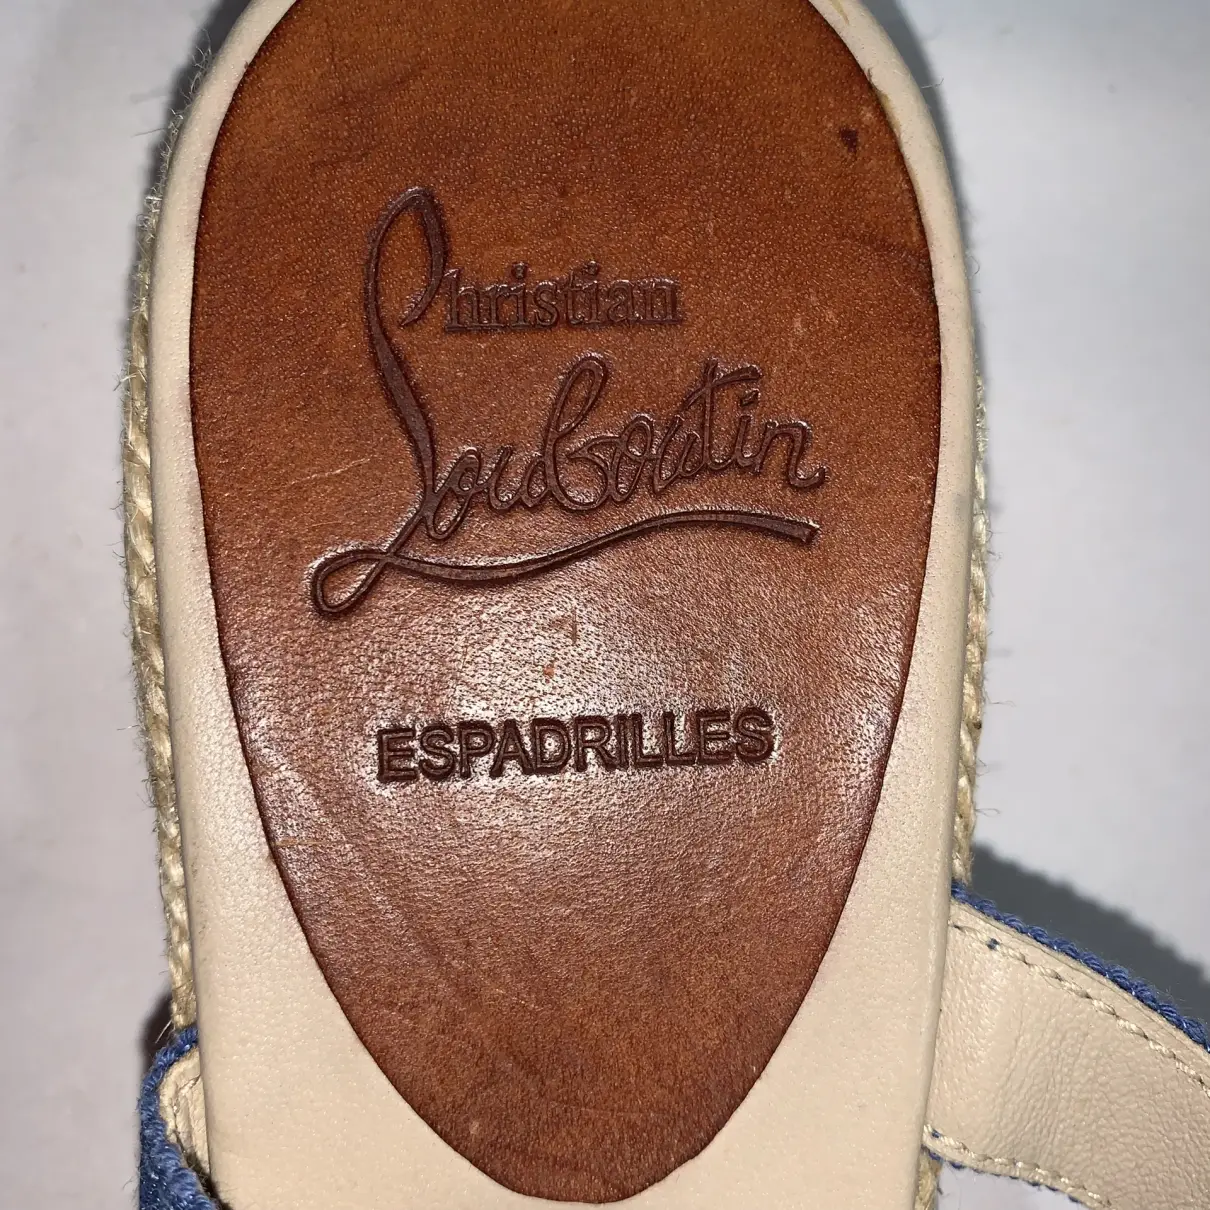 Luxury Christian Louboutin Sandals Women